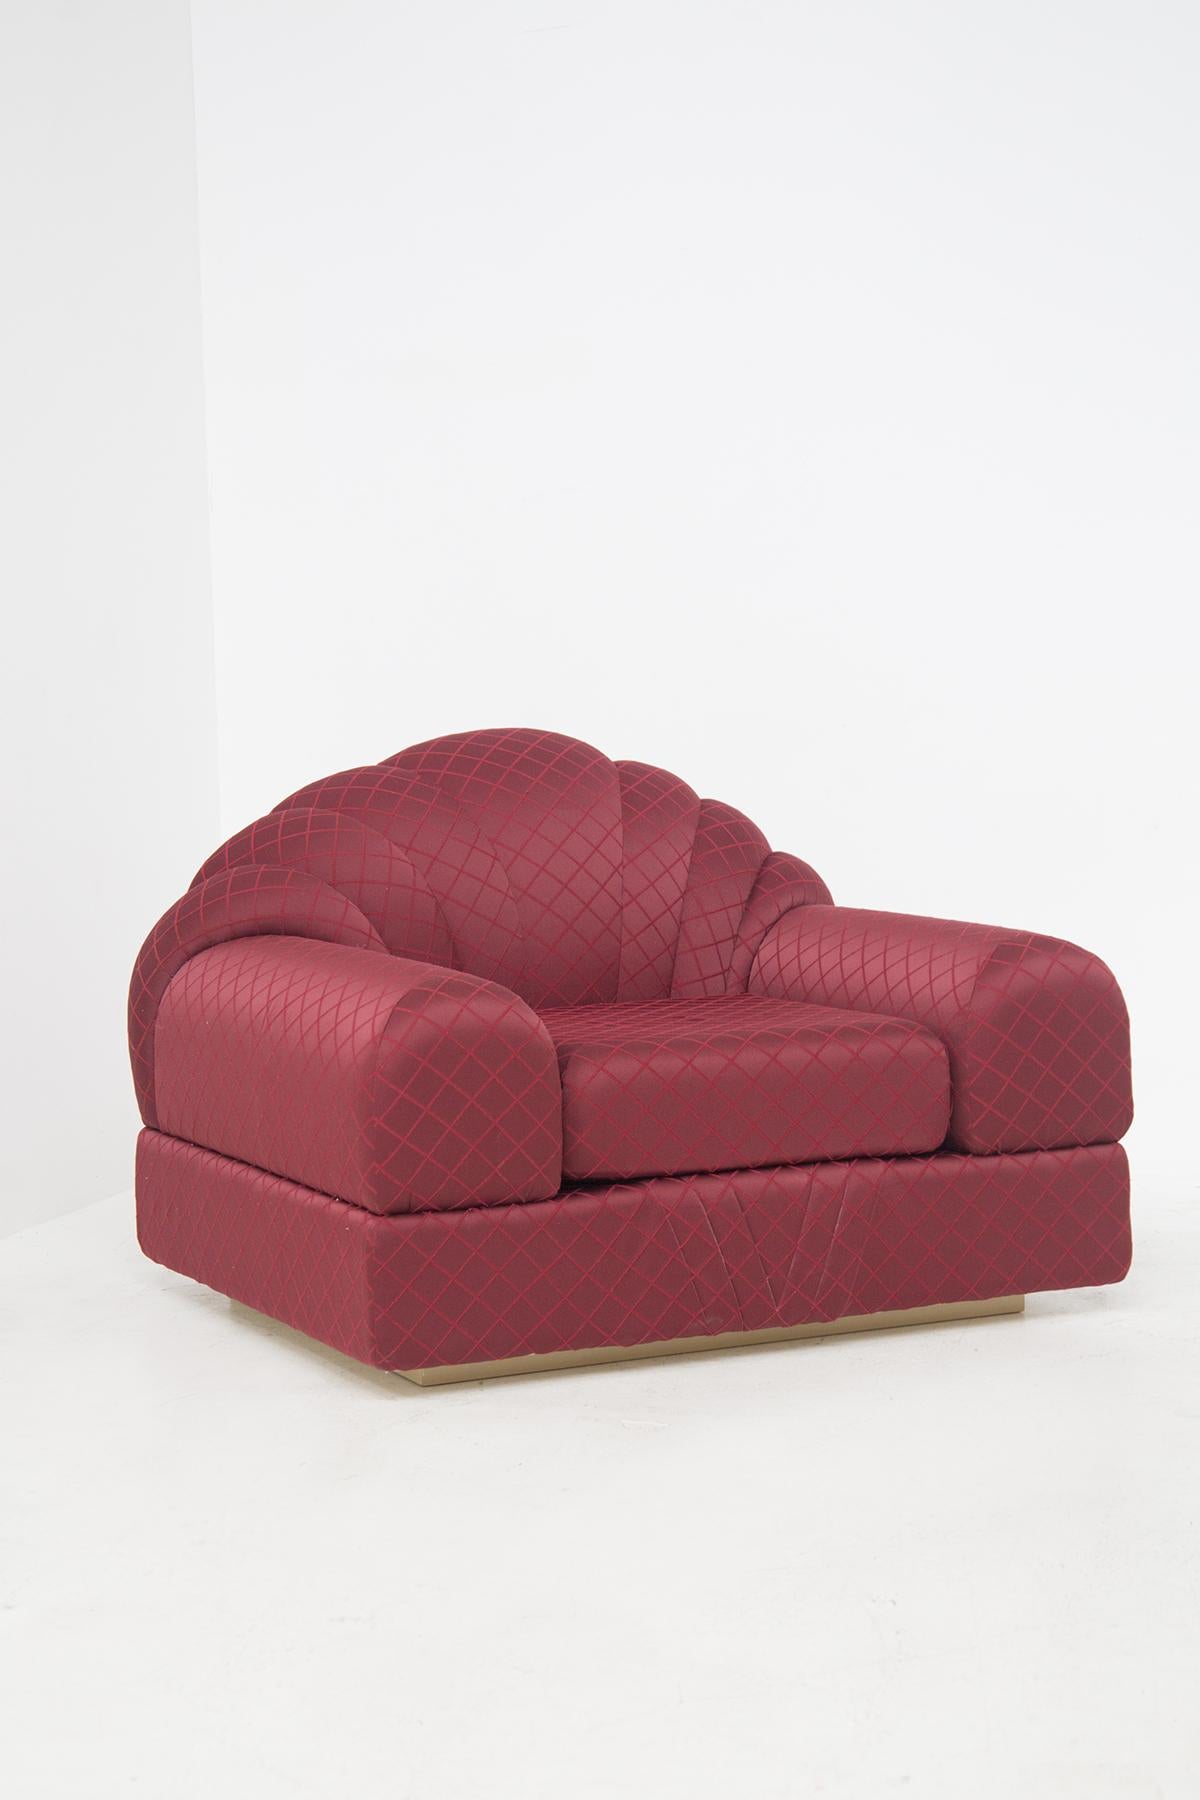 Alain Delon Vintage “Salon” Red Armchairs, Original Label In Good Condition For Sale In Milano, IT